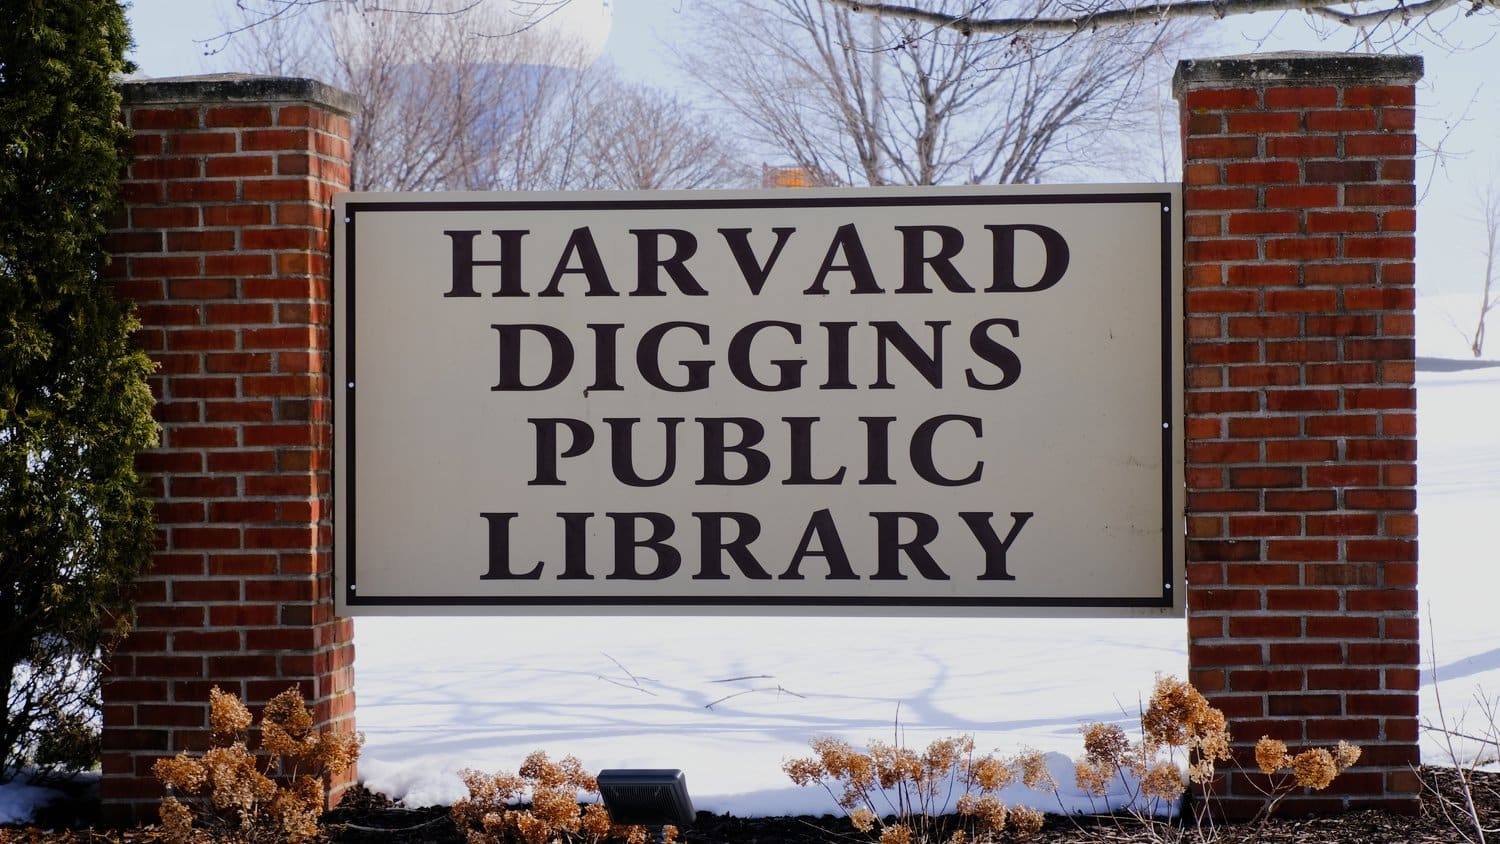 Harvard Diggins Public Library sign.